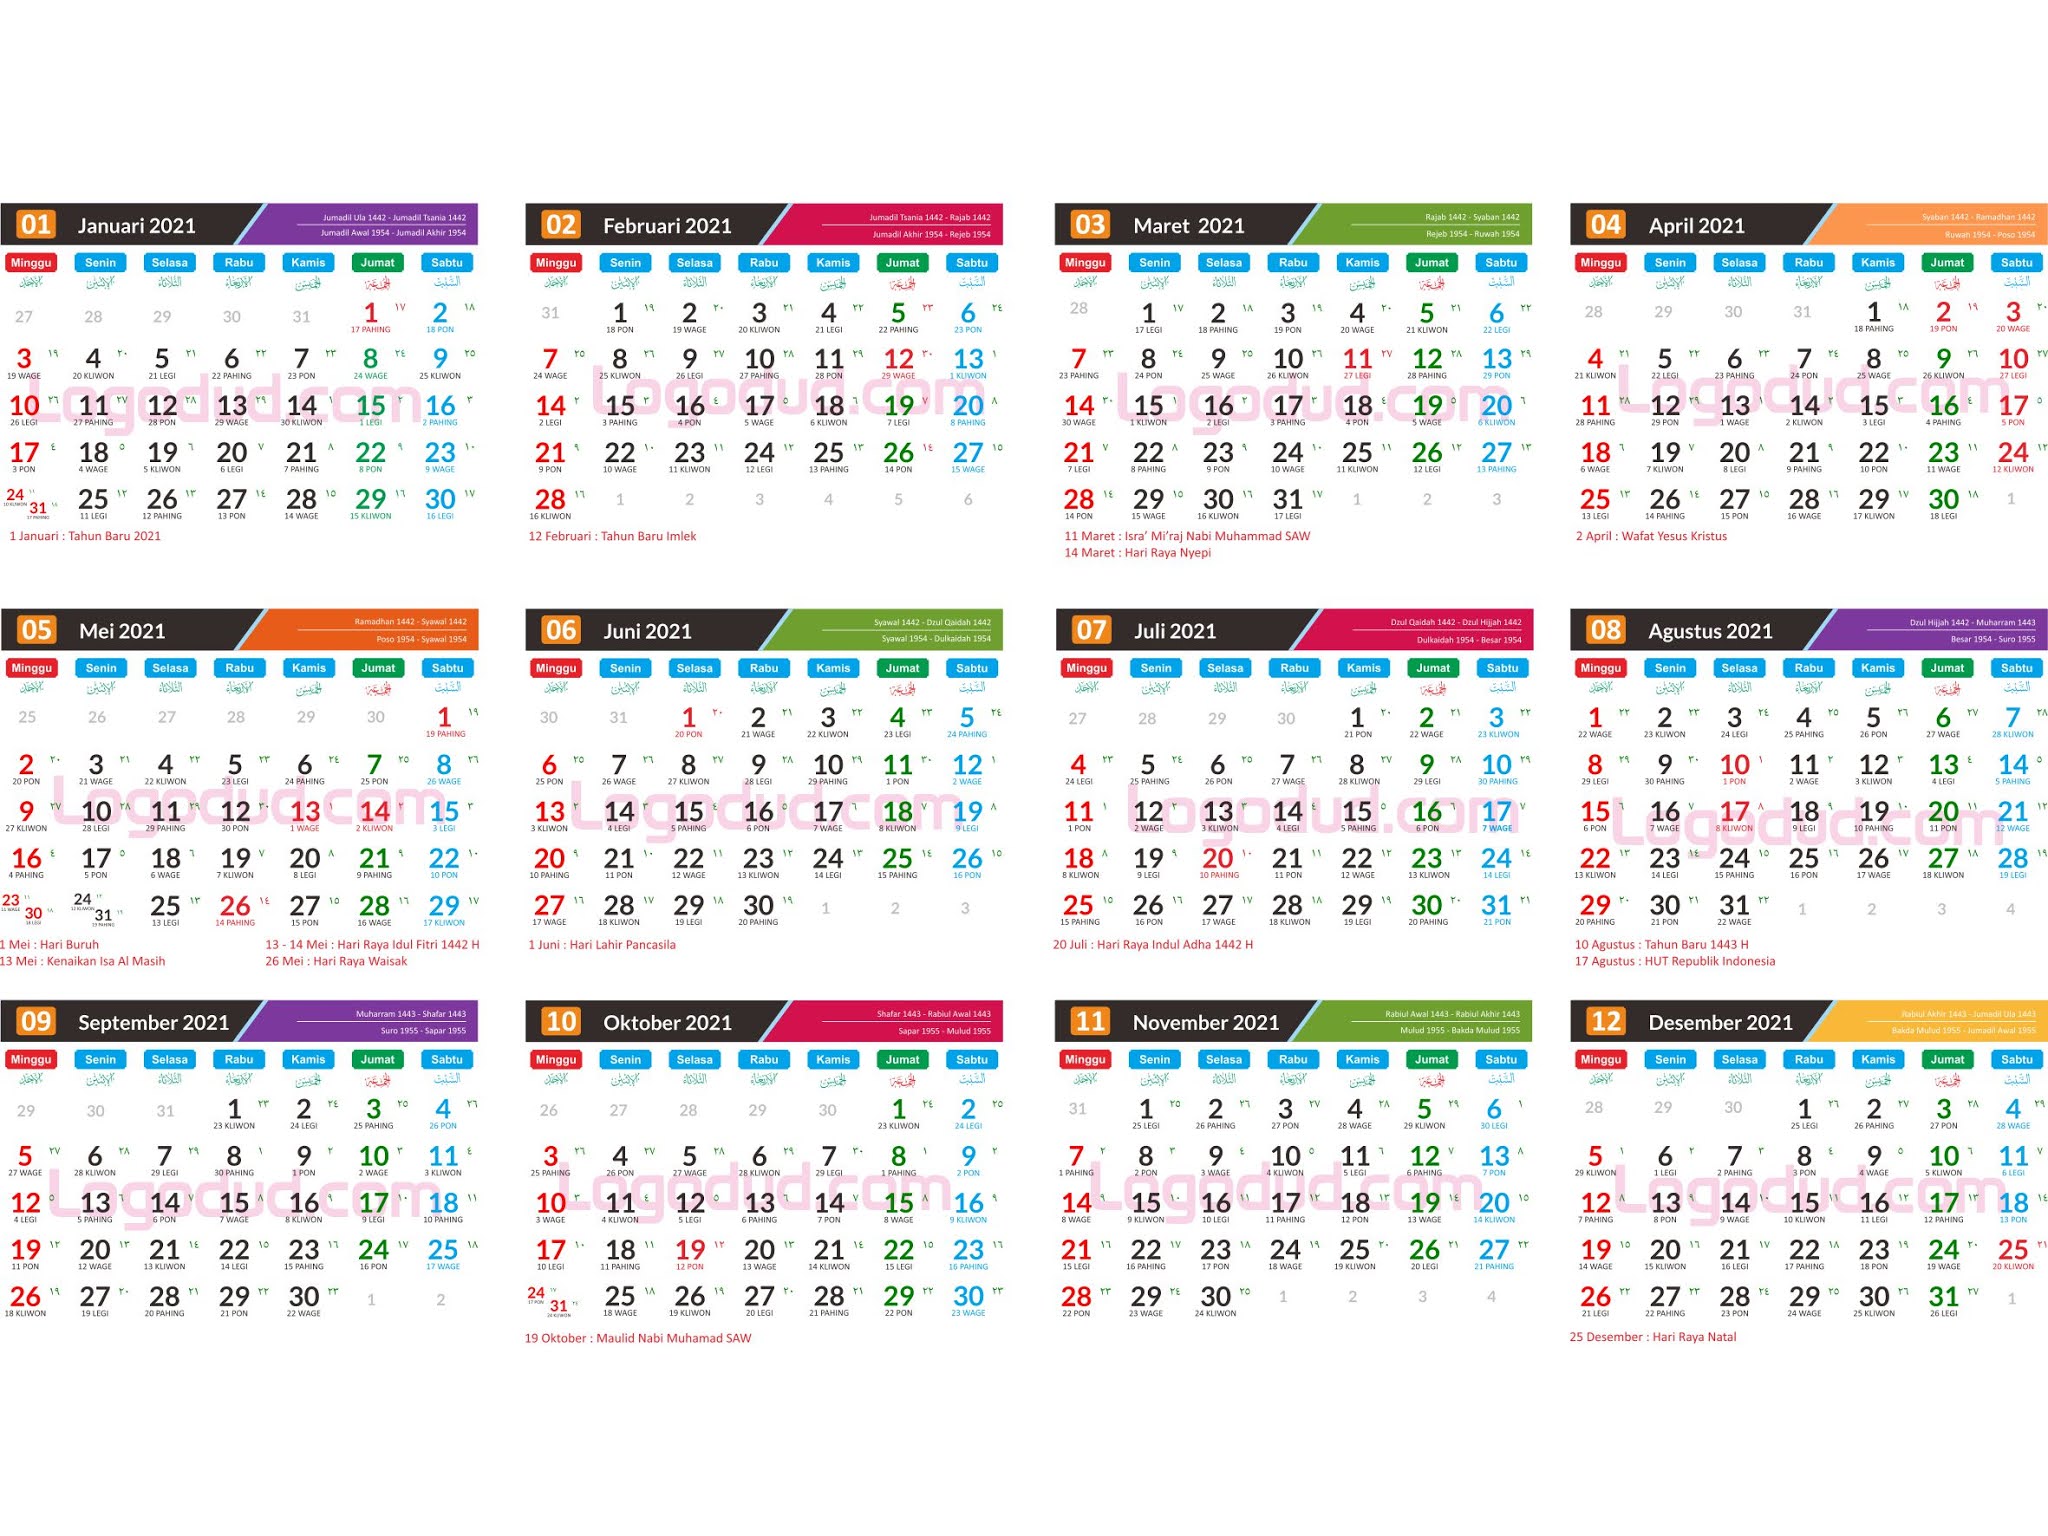 udin: View 35+ Get Template Kalender 2021 Lengkap Cdr ...